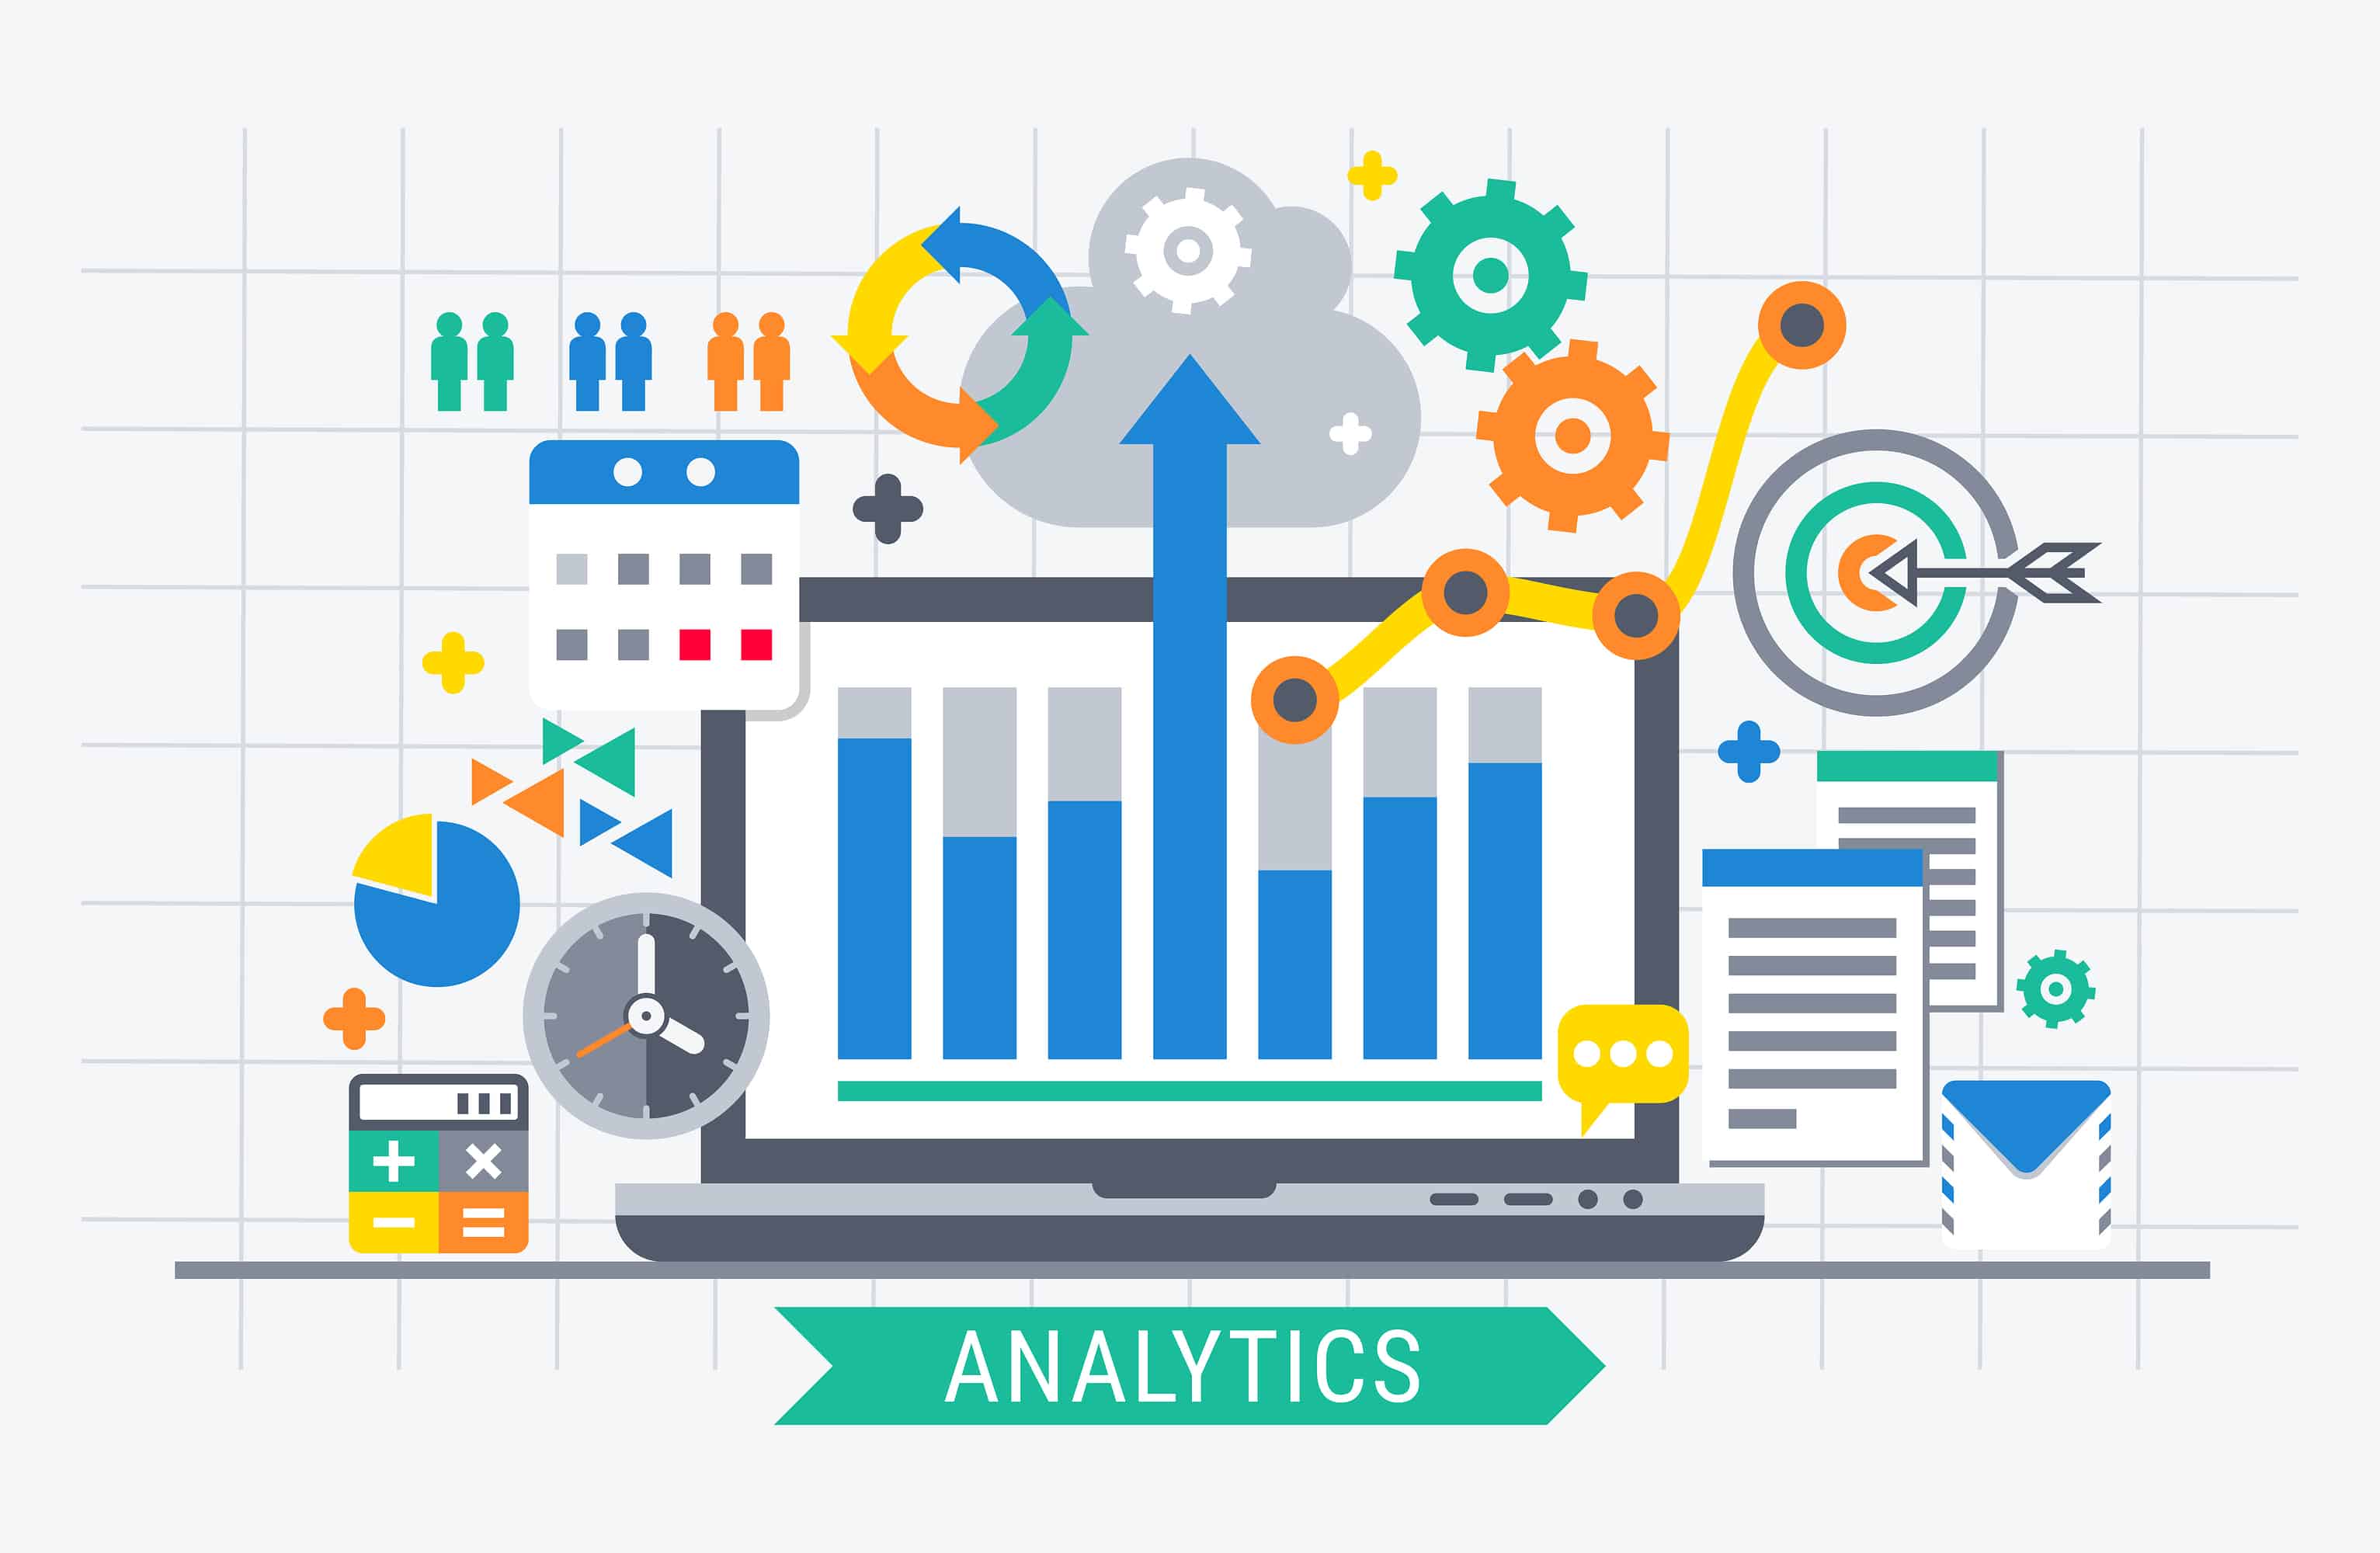 Marketing analytics is the process of analyzing marketing strategies